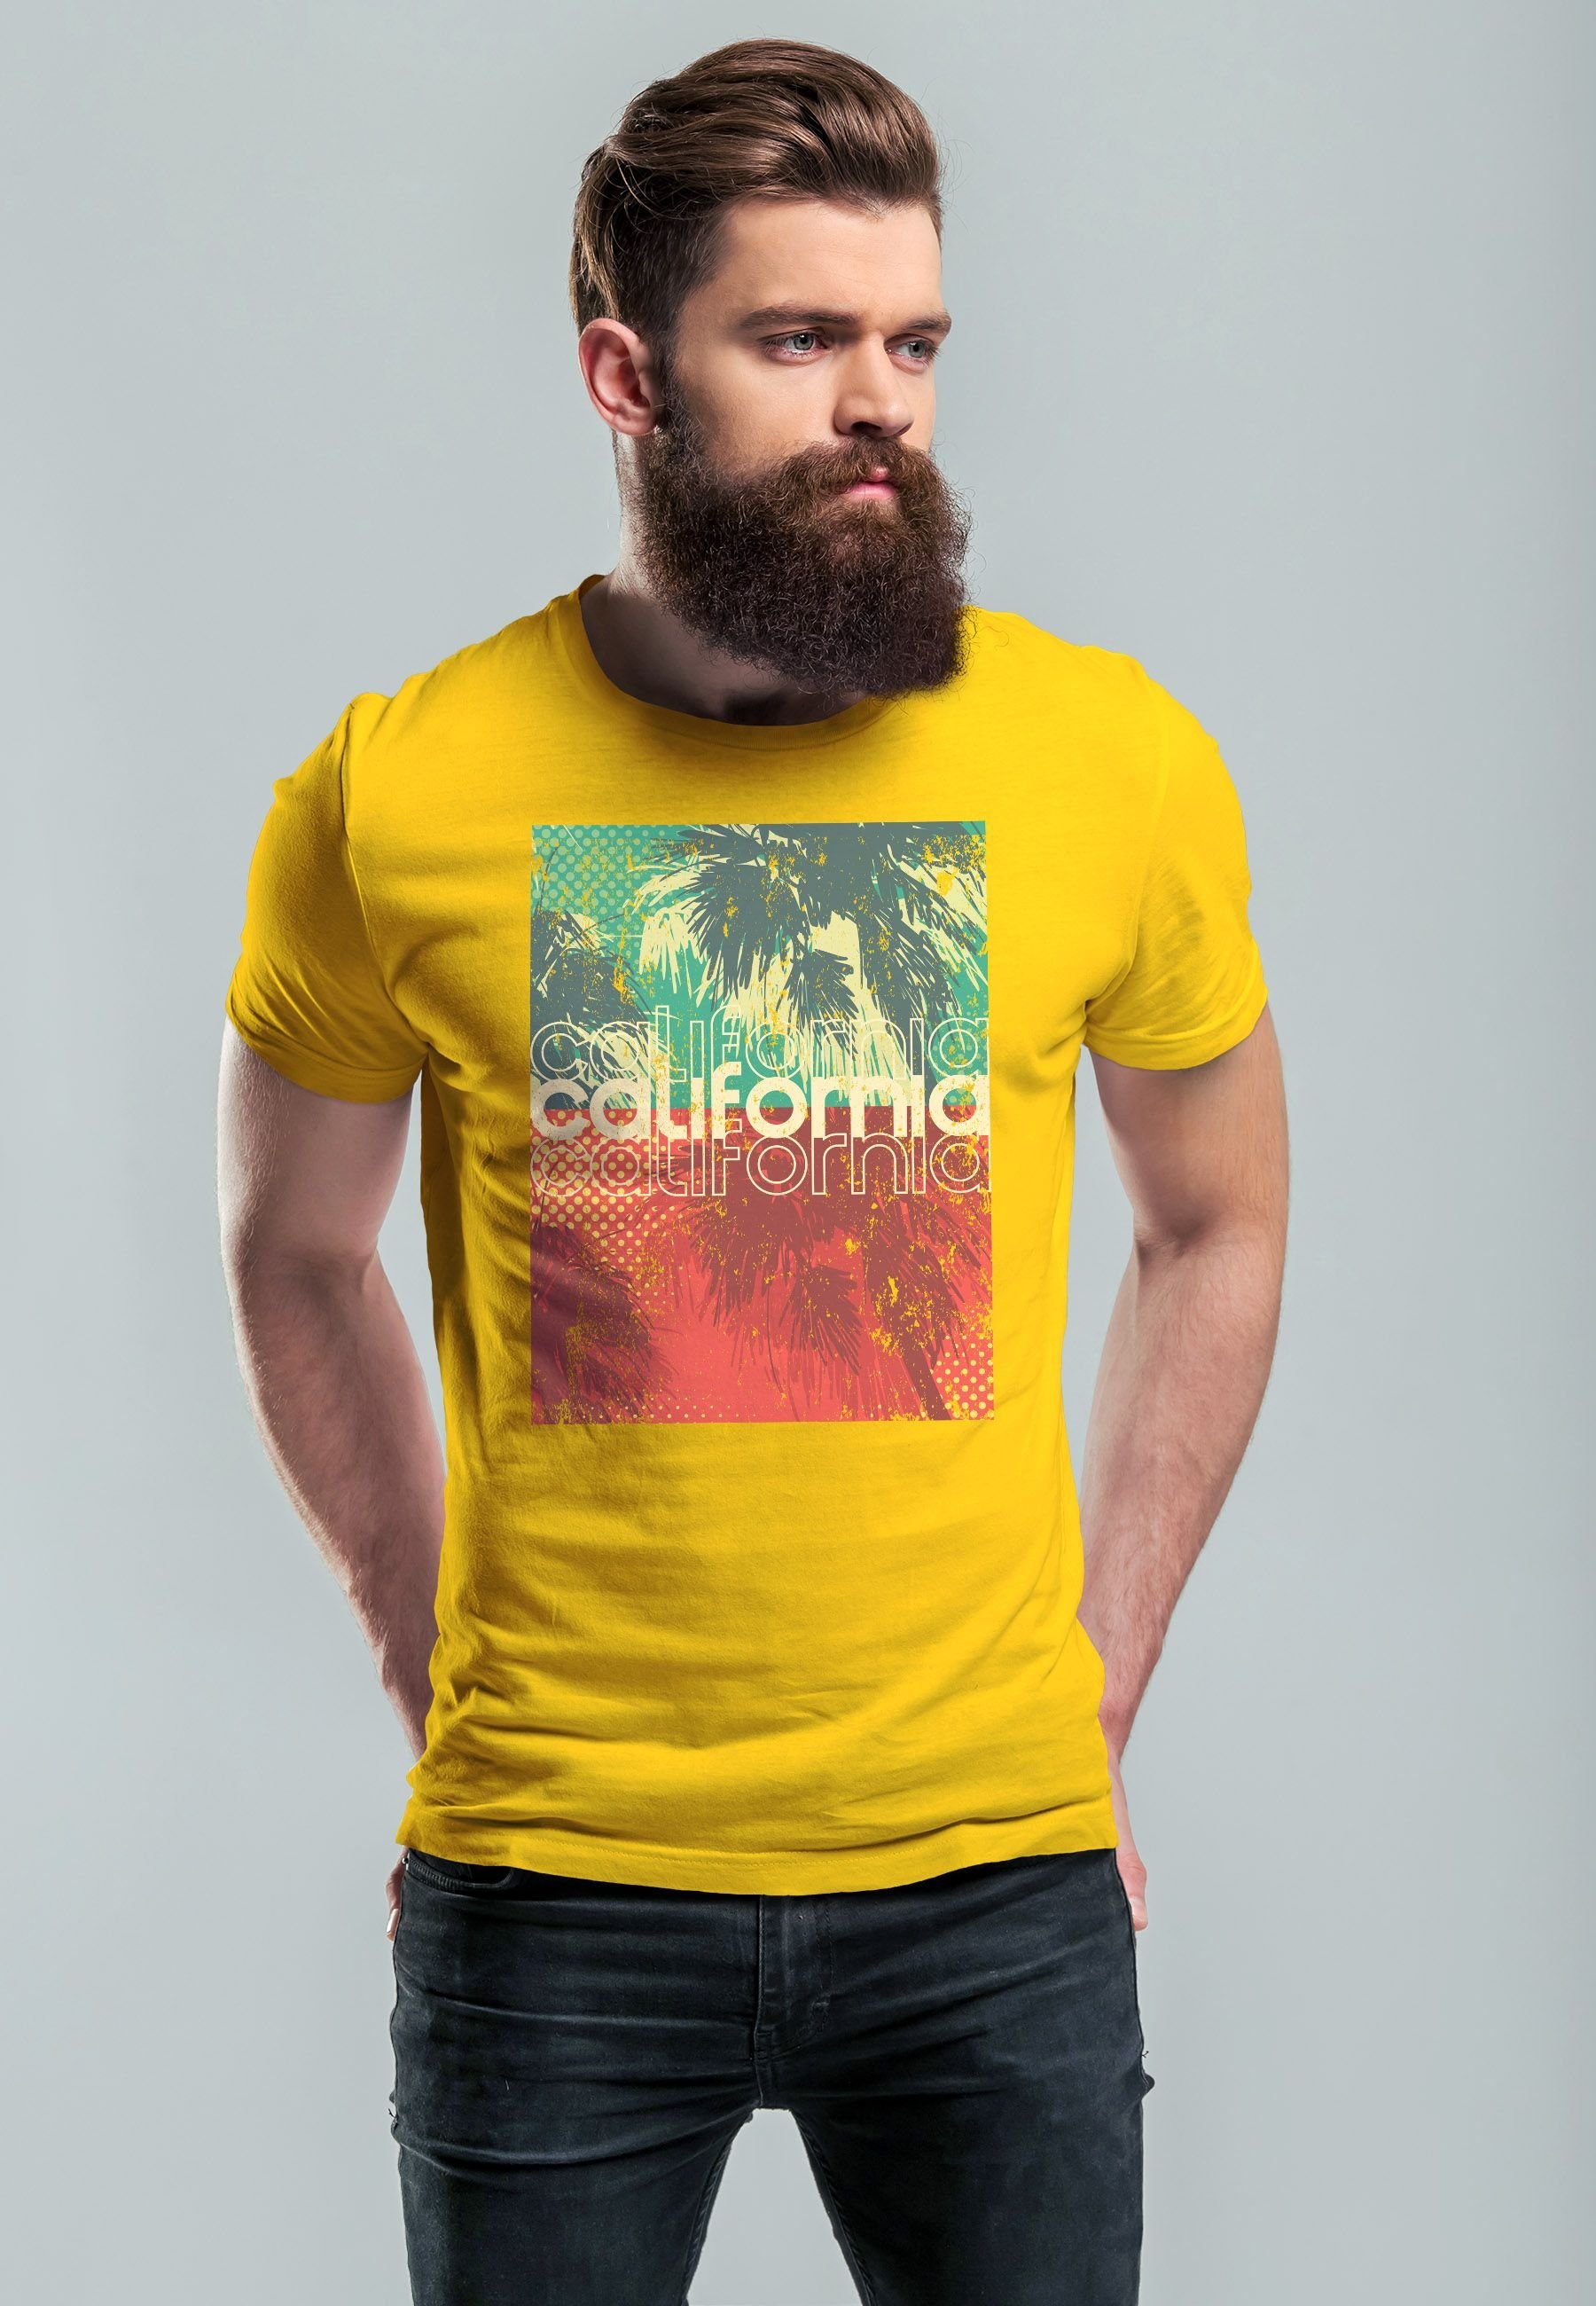 Neverless Print-Shirt Herren T-Shirt gelb Top Sommer Aufdruck Palmen mit Abstra California Print Foto Print